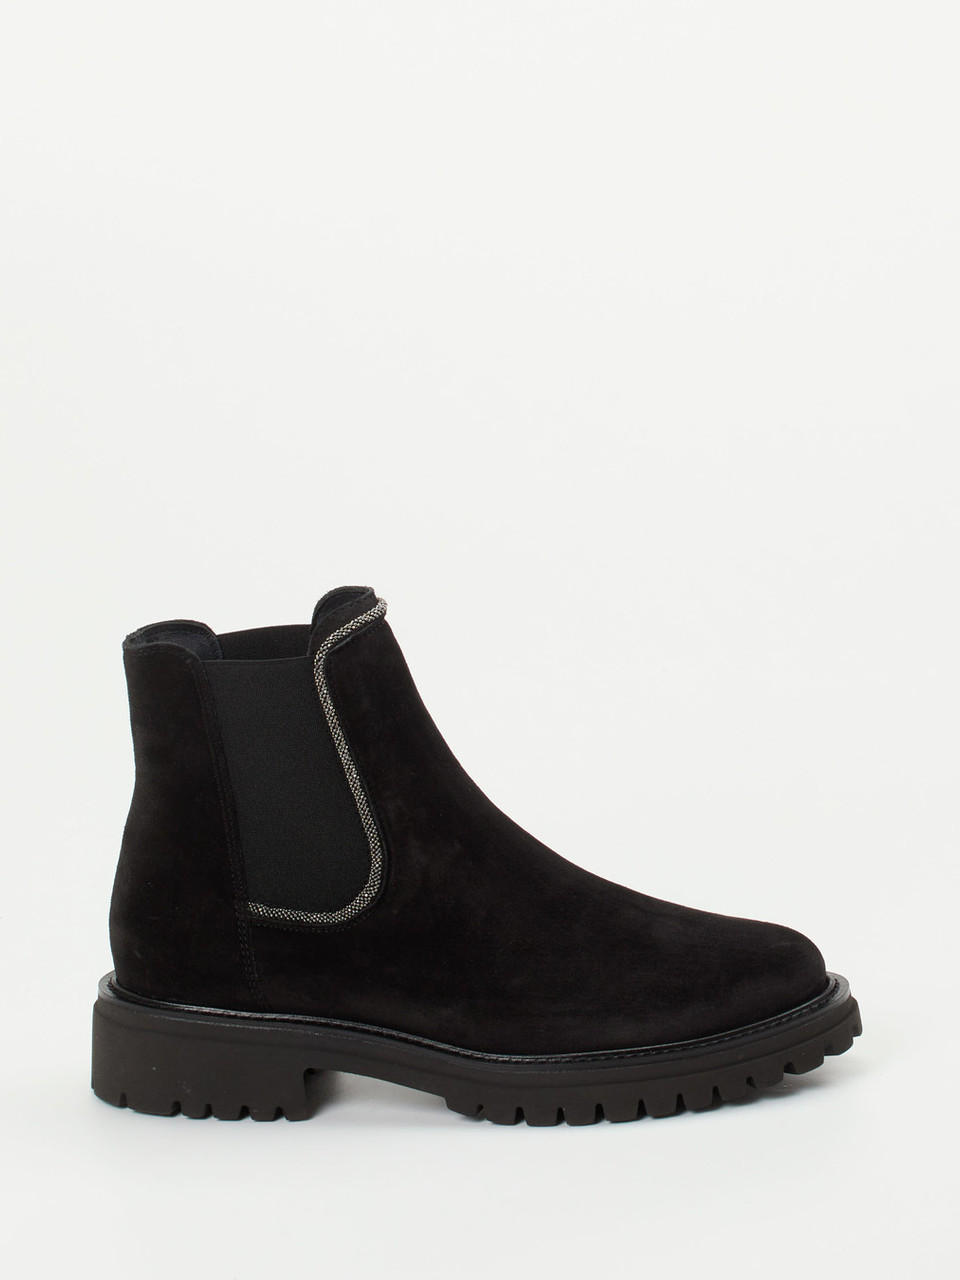 Paul Green Damen Chelsea Boots in schwarz kaufen | Zumnorde Online-Shop